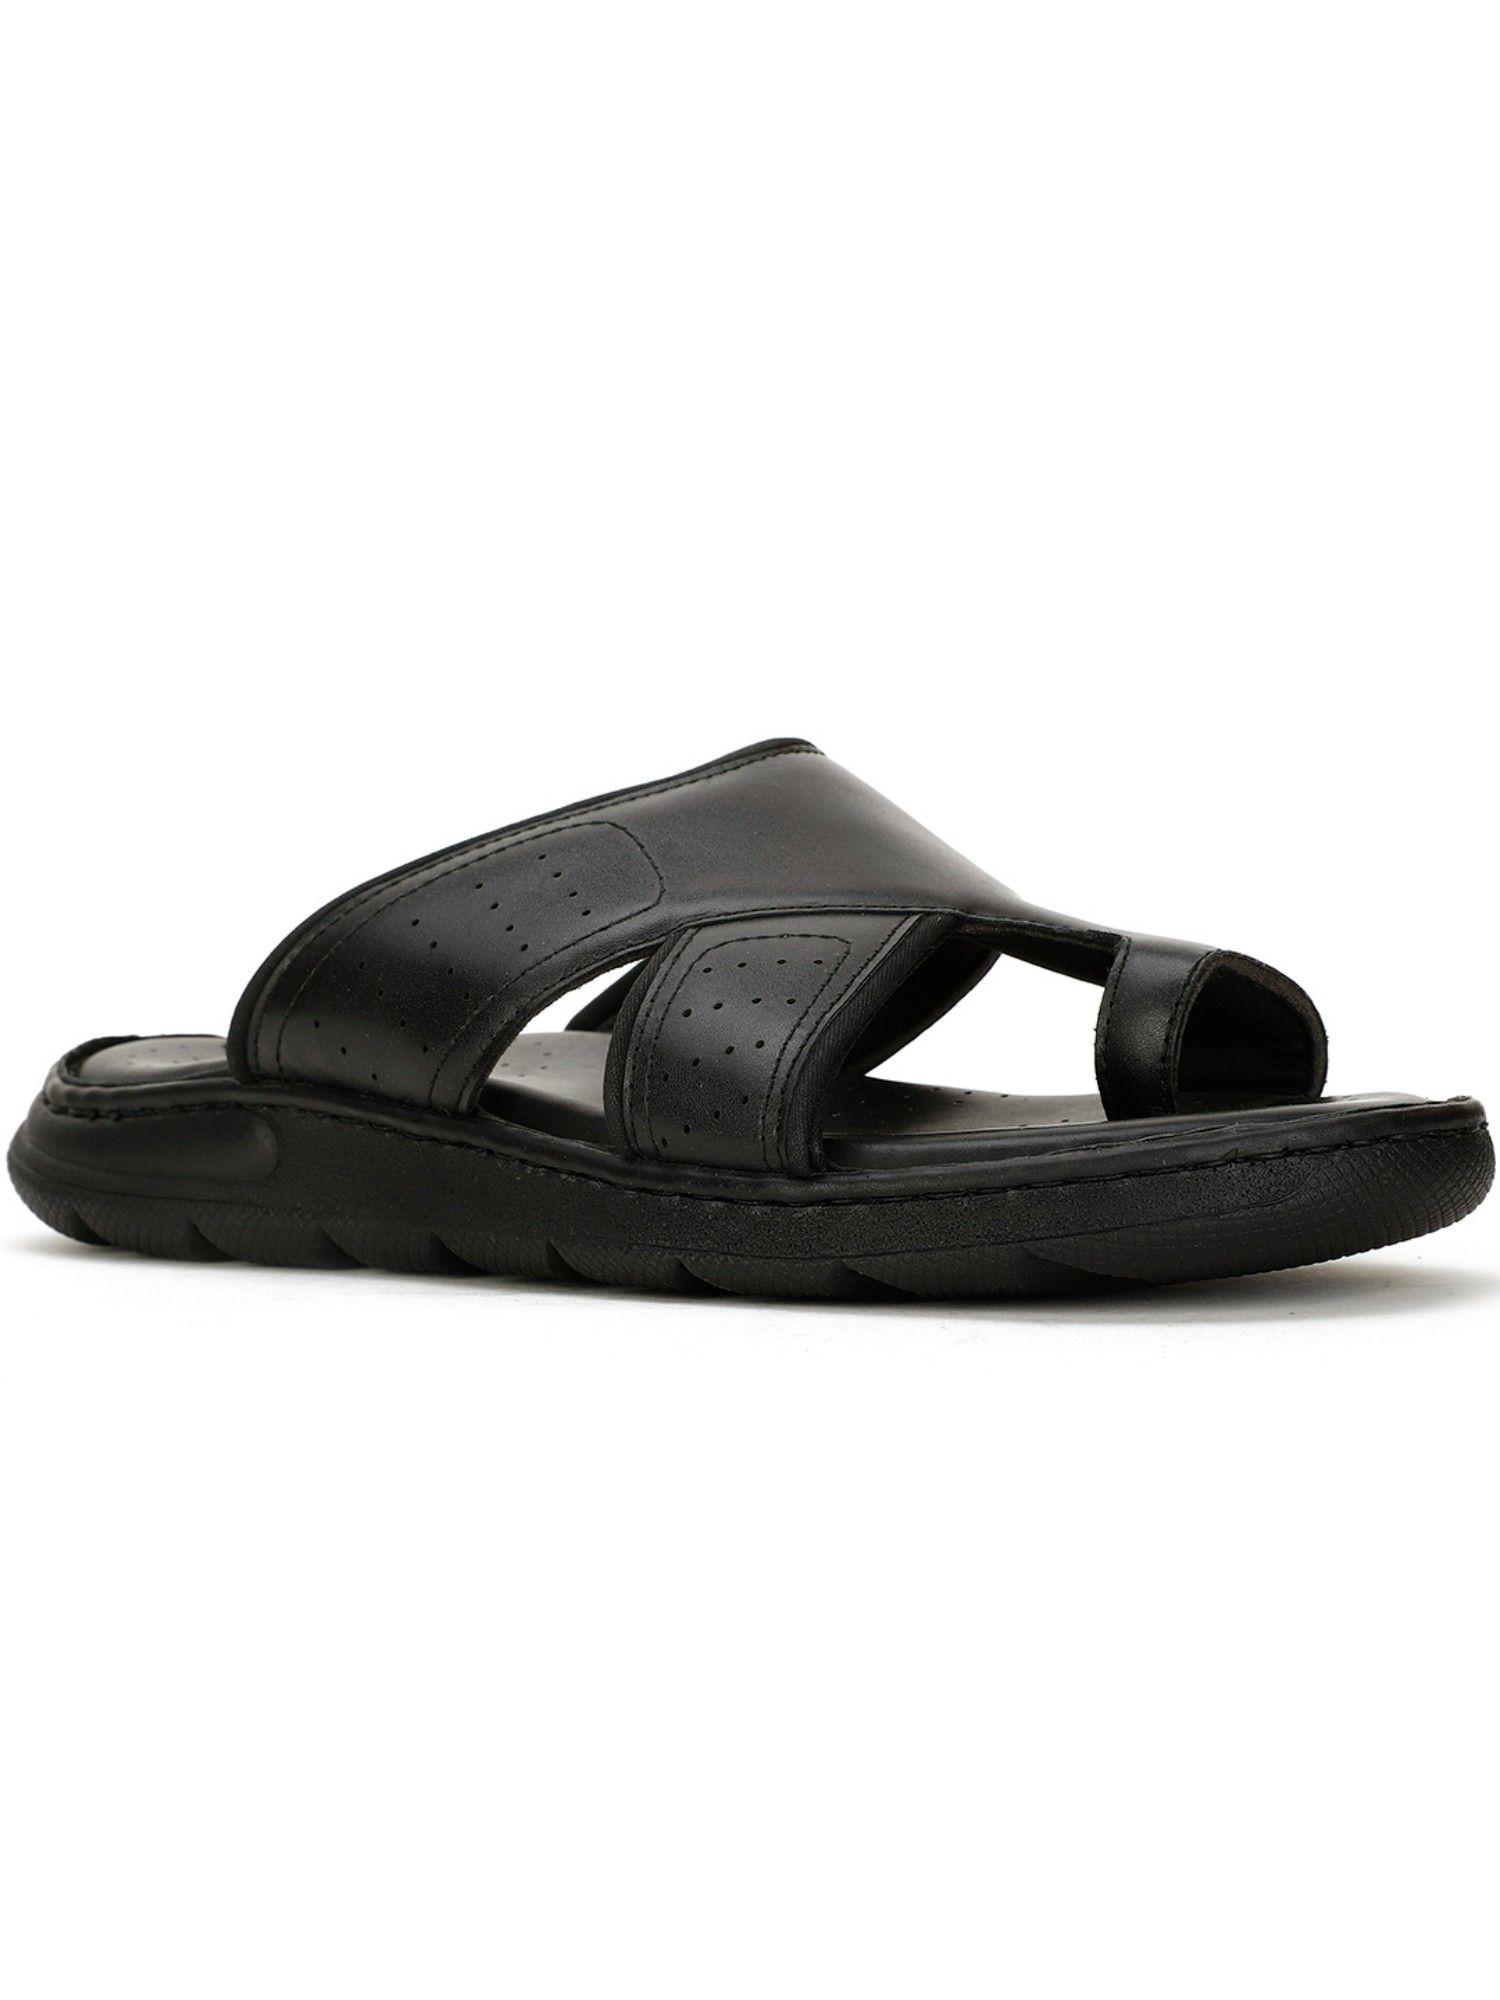 men-black-sandals